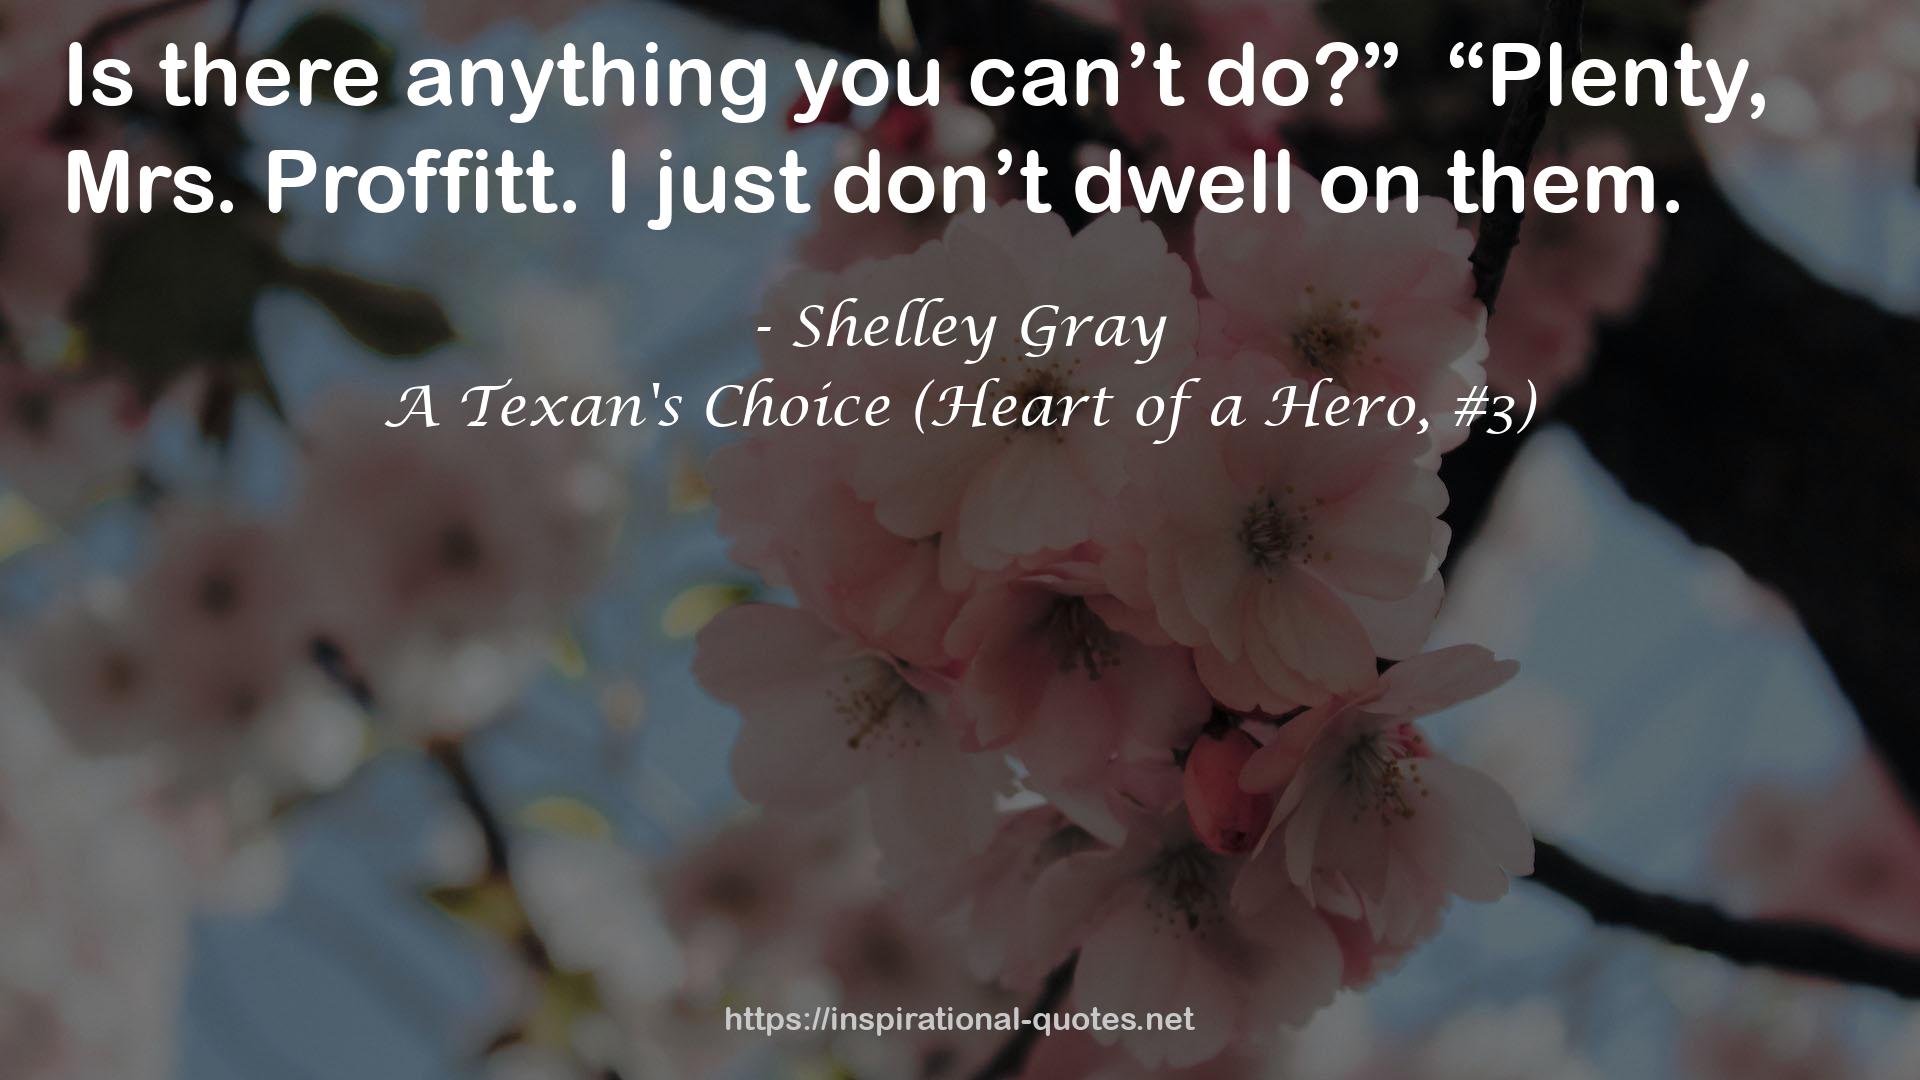 A Texan's Choice (Heart of a Hero, #3) QUOTES